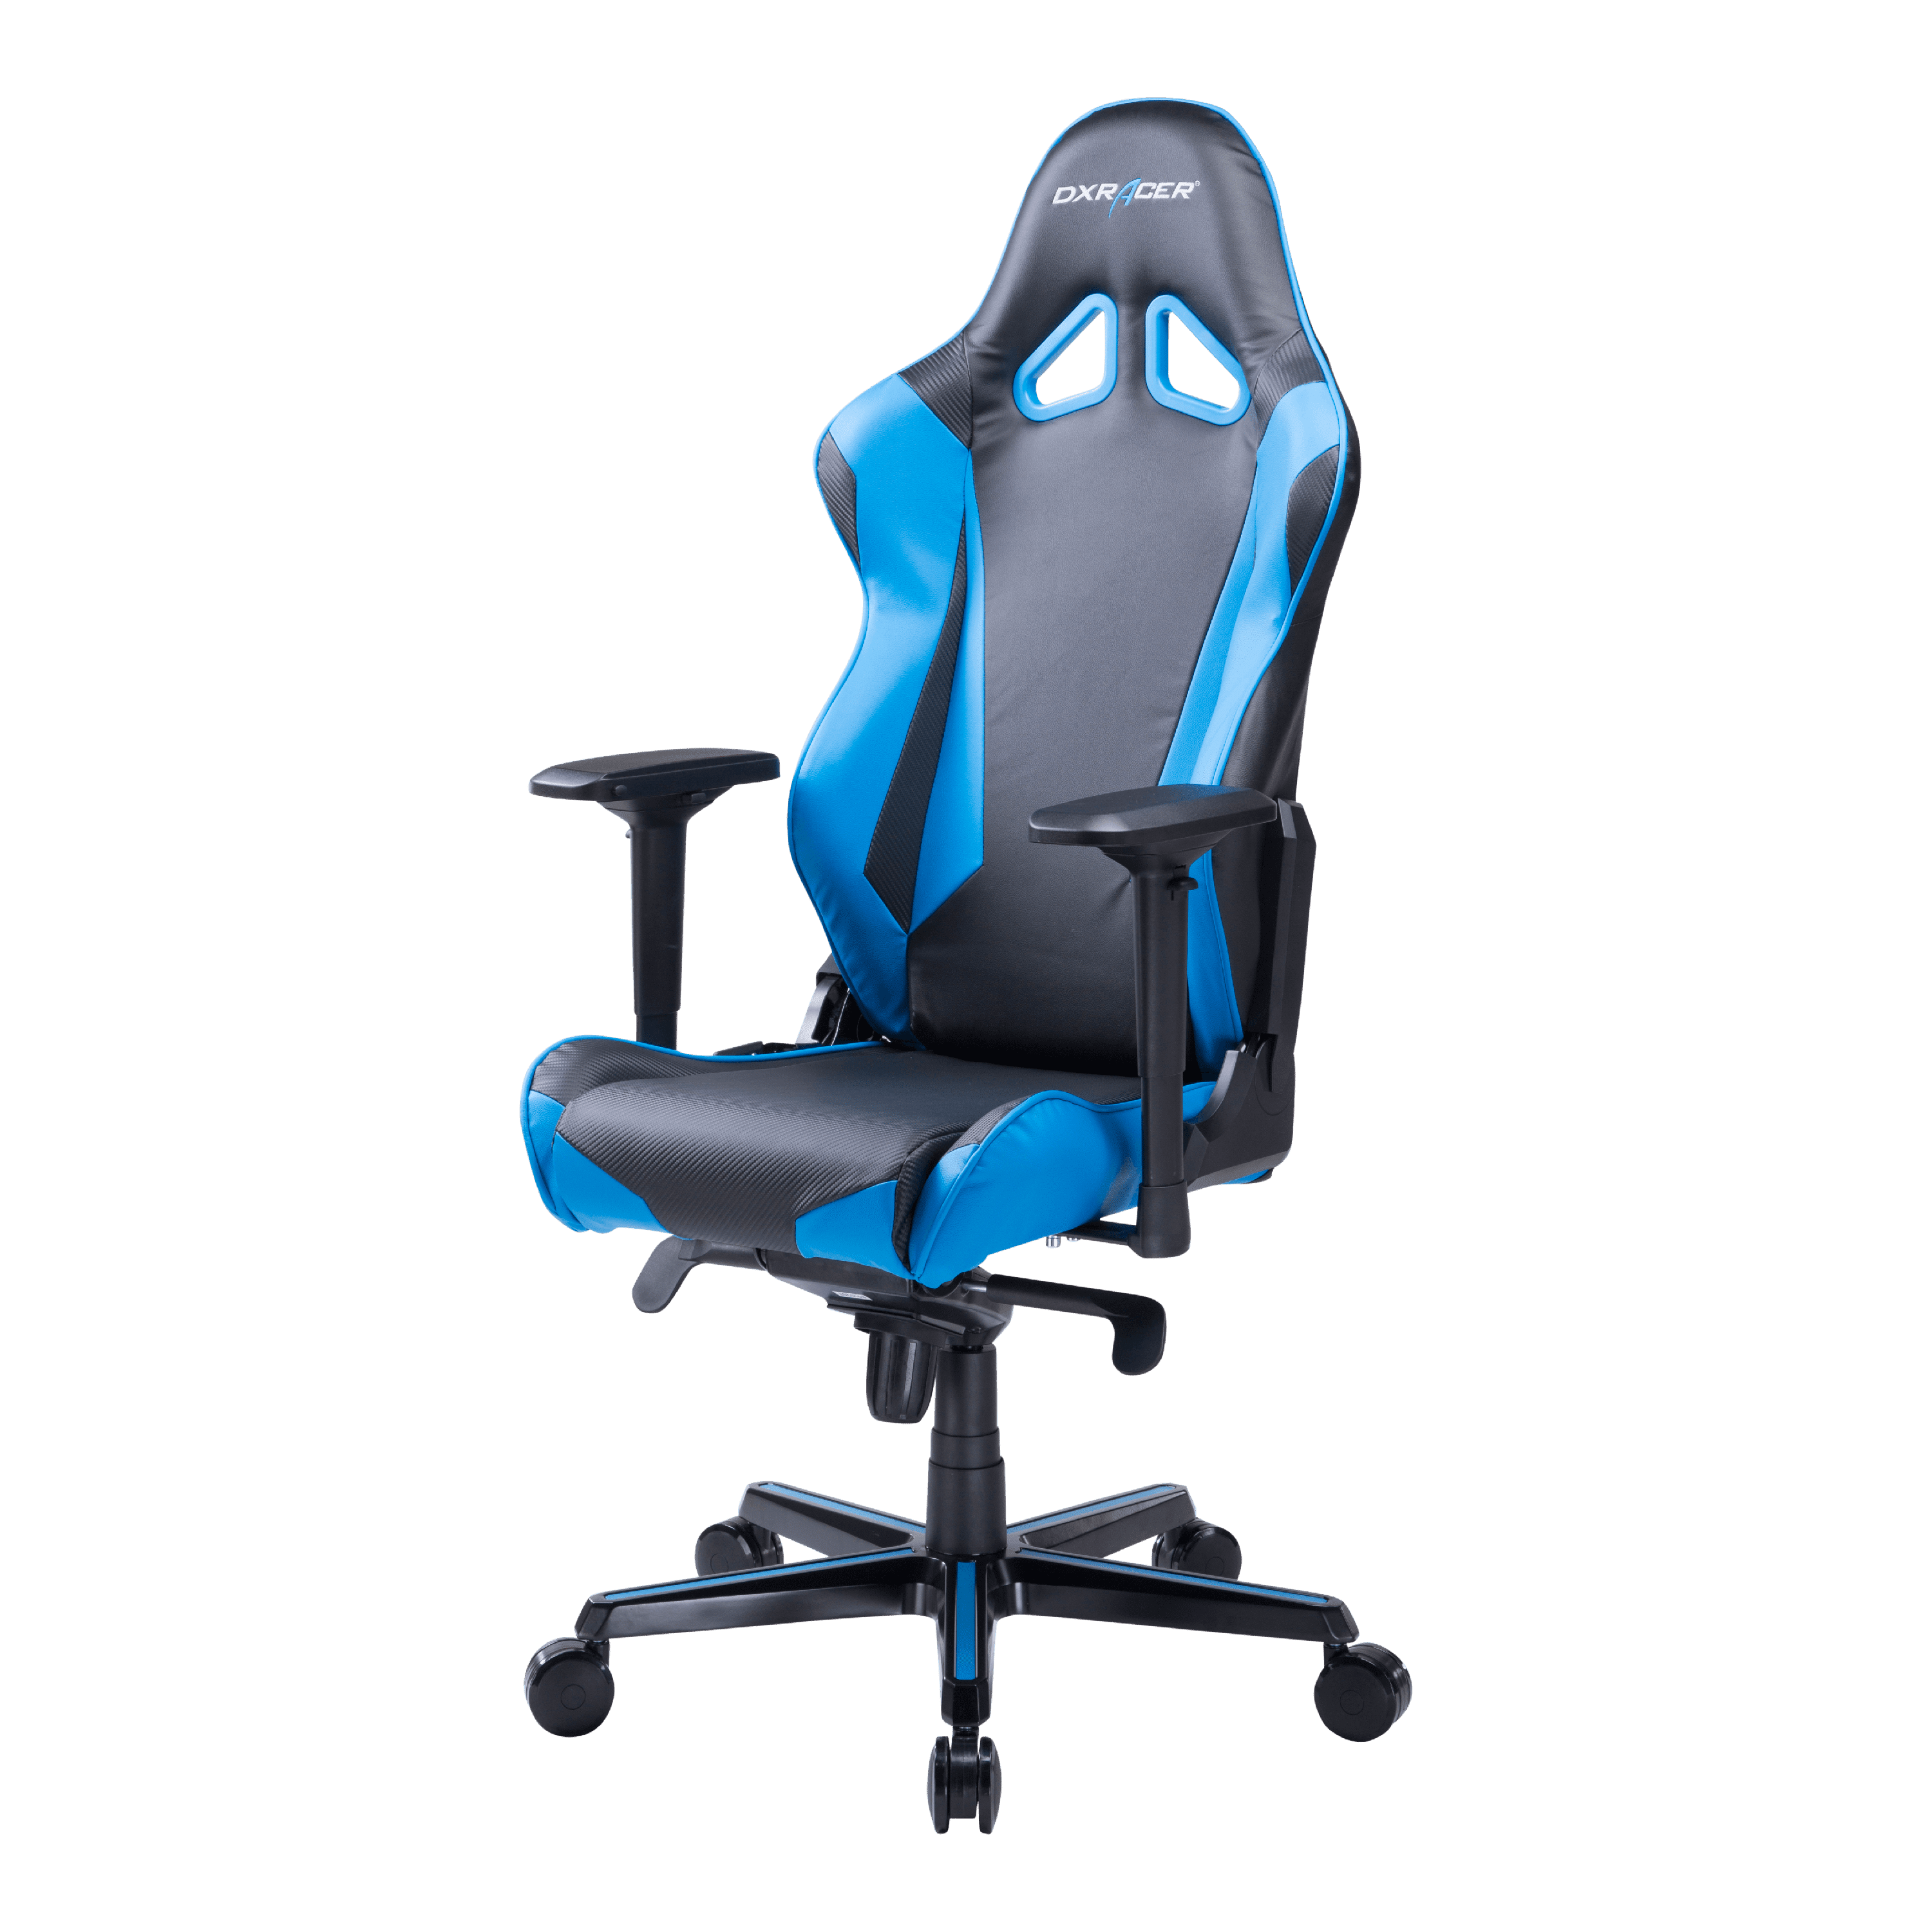 Dxracer Racing Series Ergonomic High Back Reclining Gaming Chair Oh Rv001 Nb Black And Blue Walmart Com Walmart Com